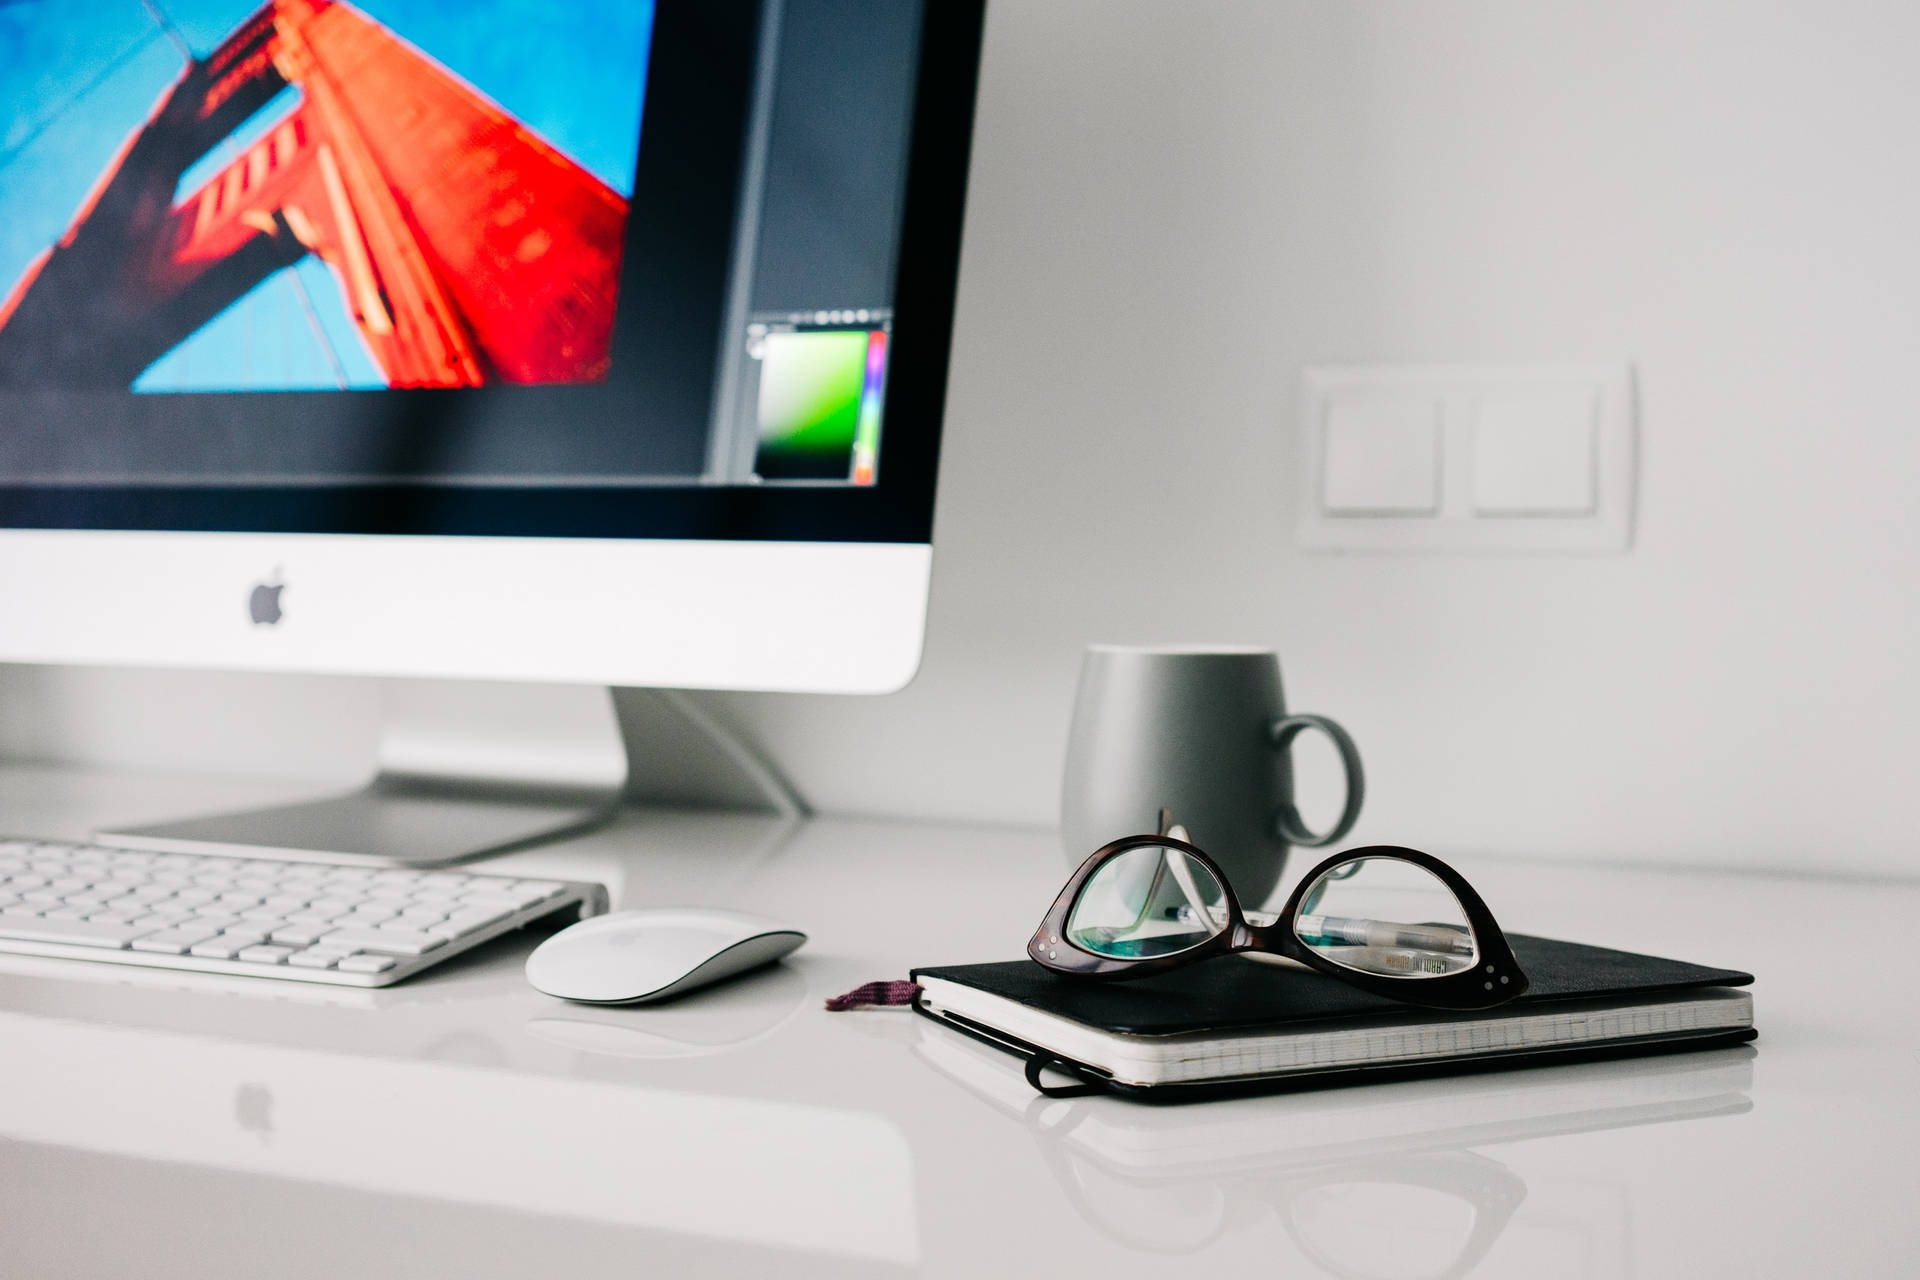 Caption: Sophisticated Mac Workspace Setup On A Clean Wooden Desk Background